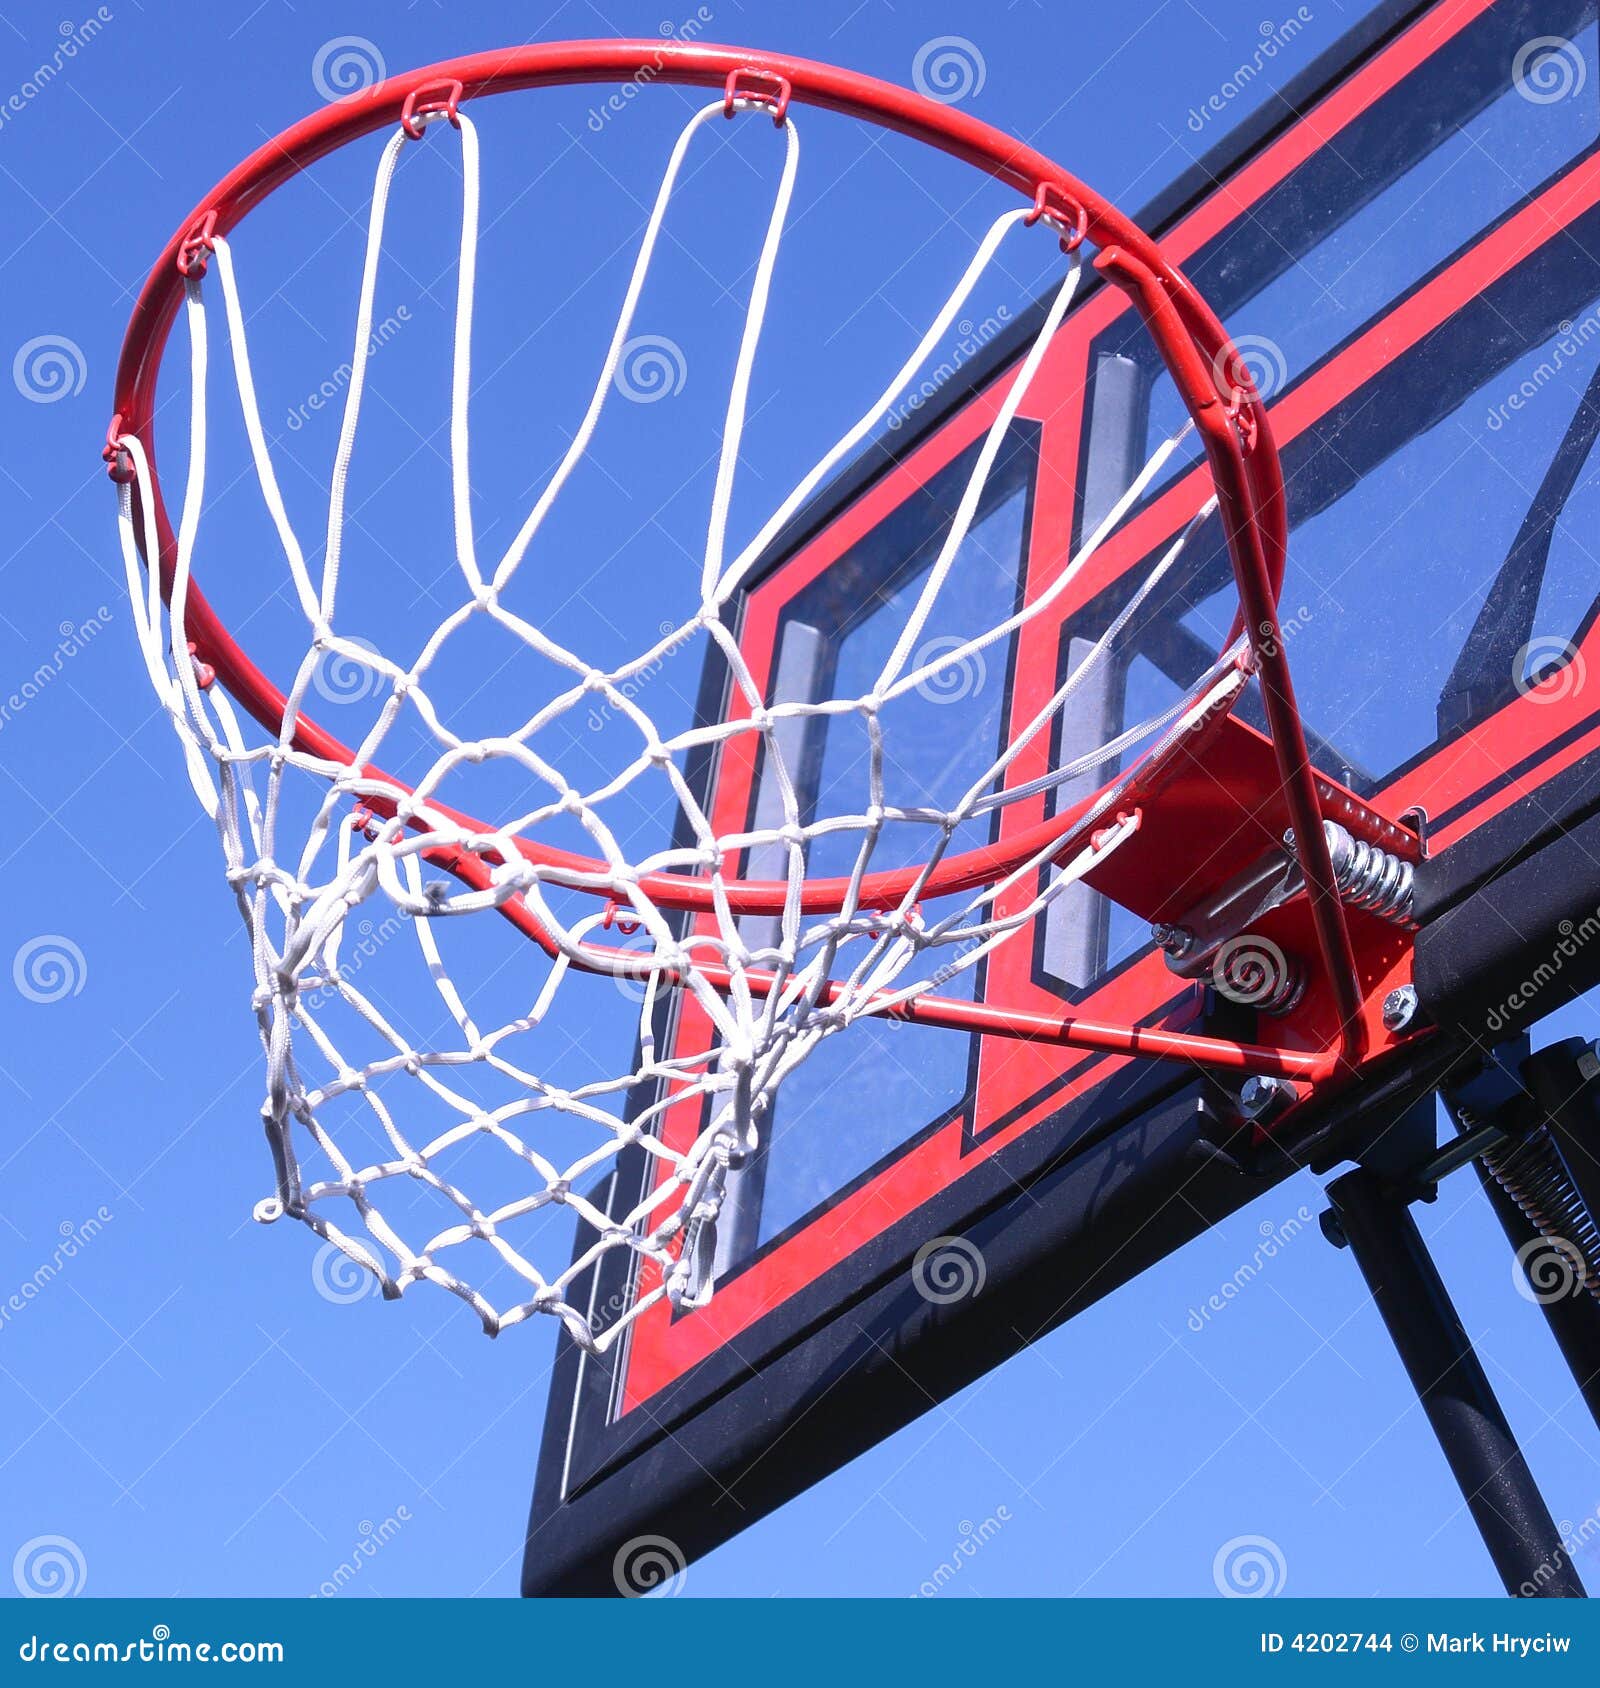 https://thumbs.dreamstime.com/z/outdoor-basketball-hoop-net-4202744.jpg